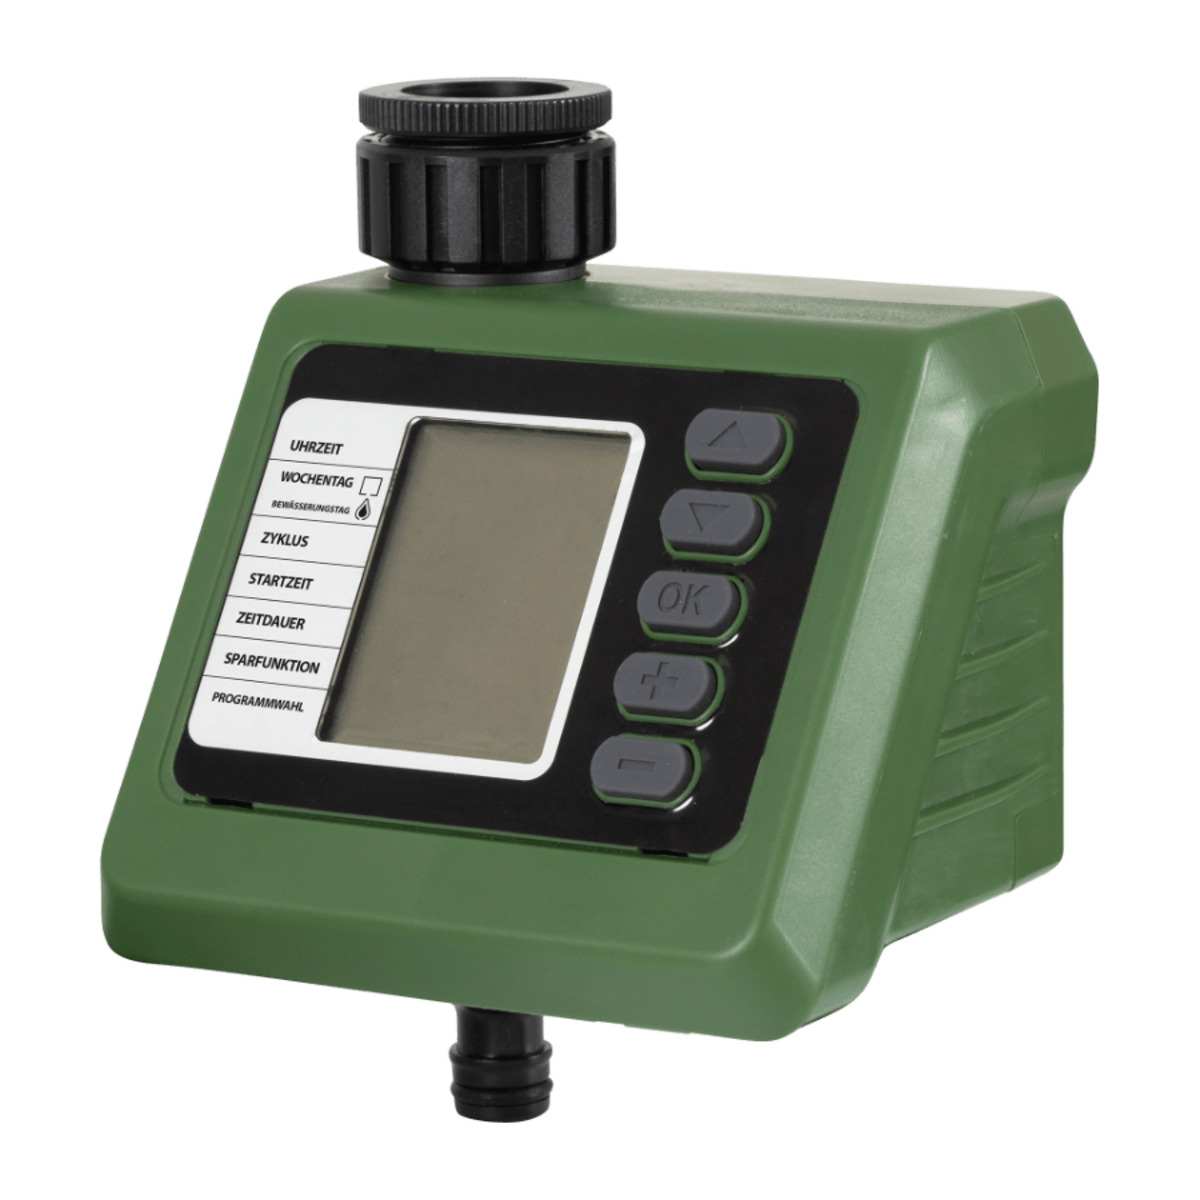 Ferrex Irrigation Computer With Rain Sensor, Integrated Timer